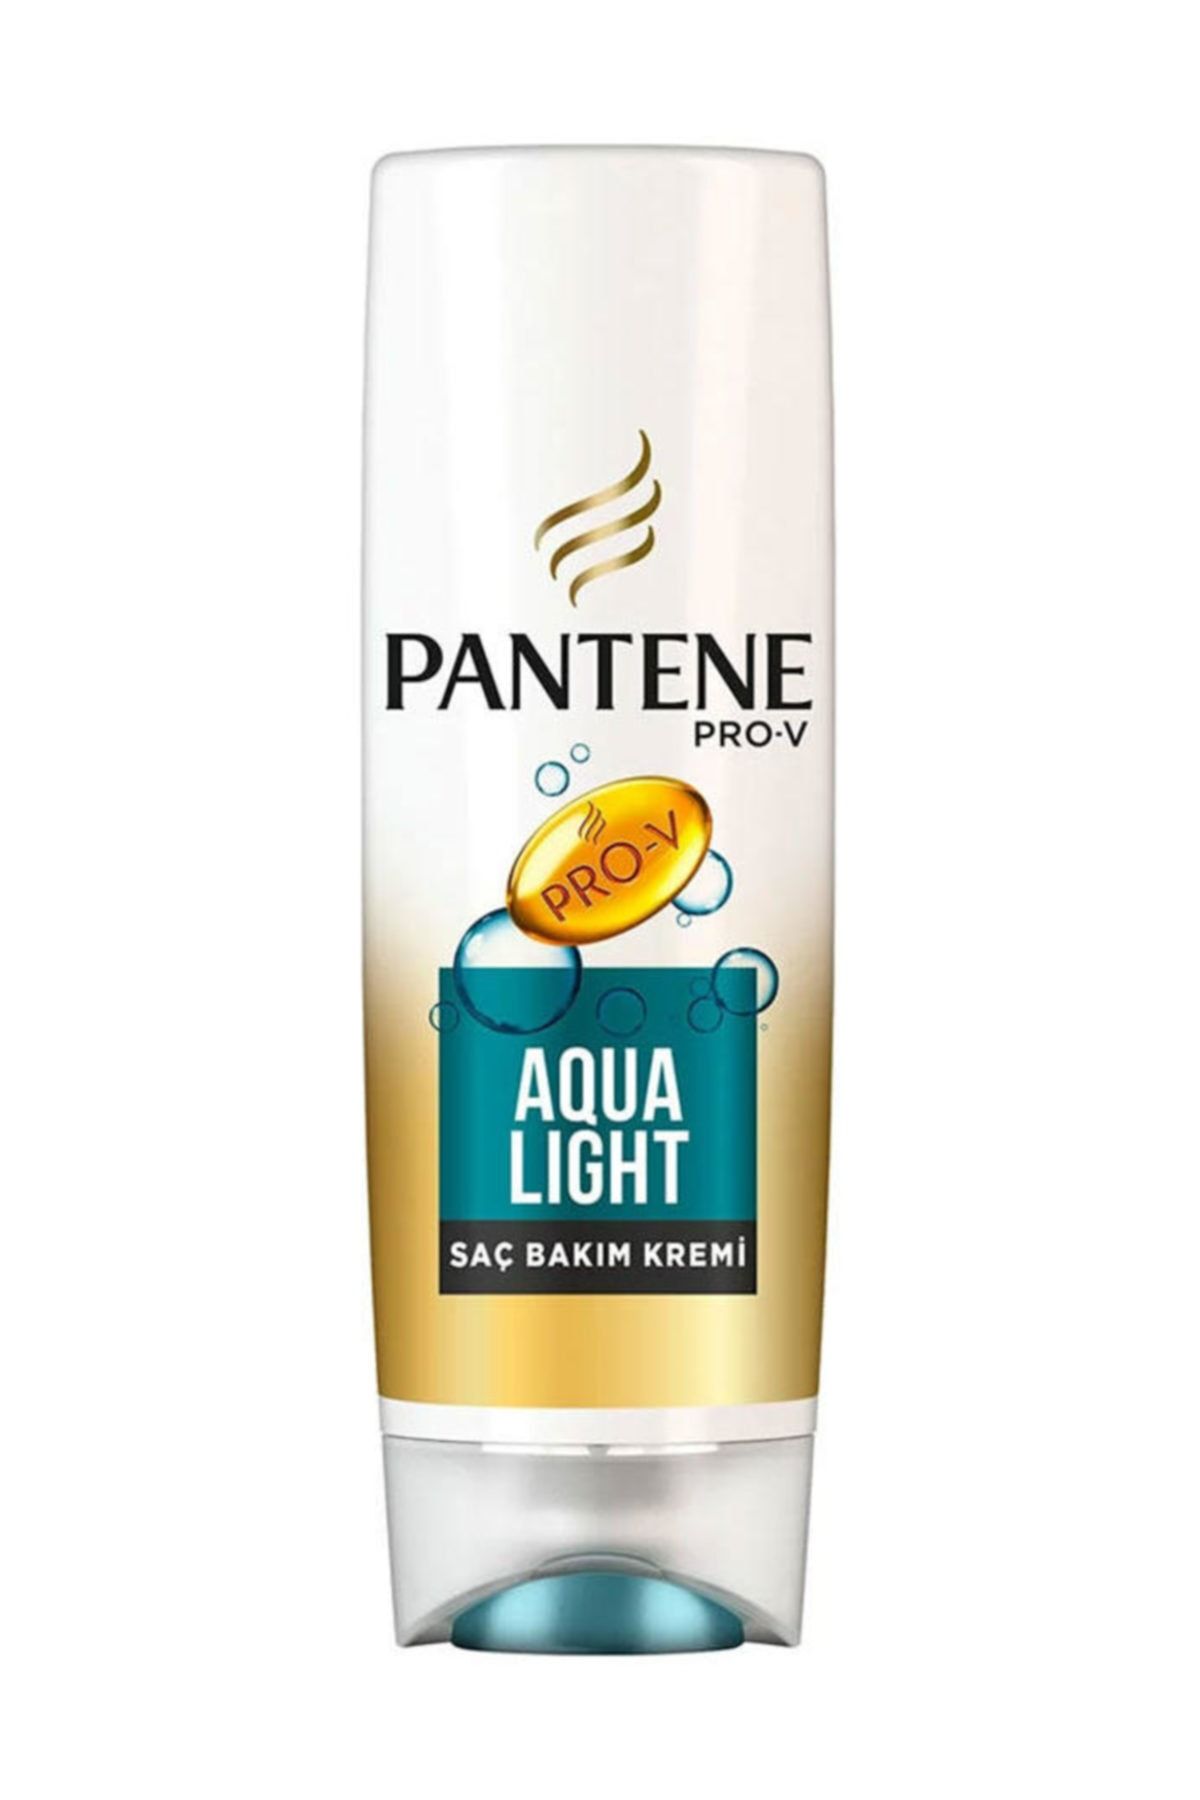 Pantene Aqualight Saç Bakım Kremi 360 ml